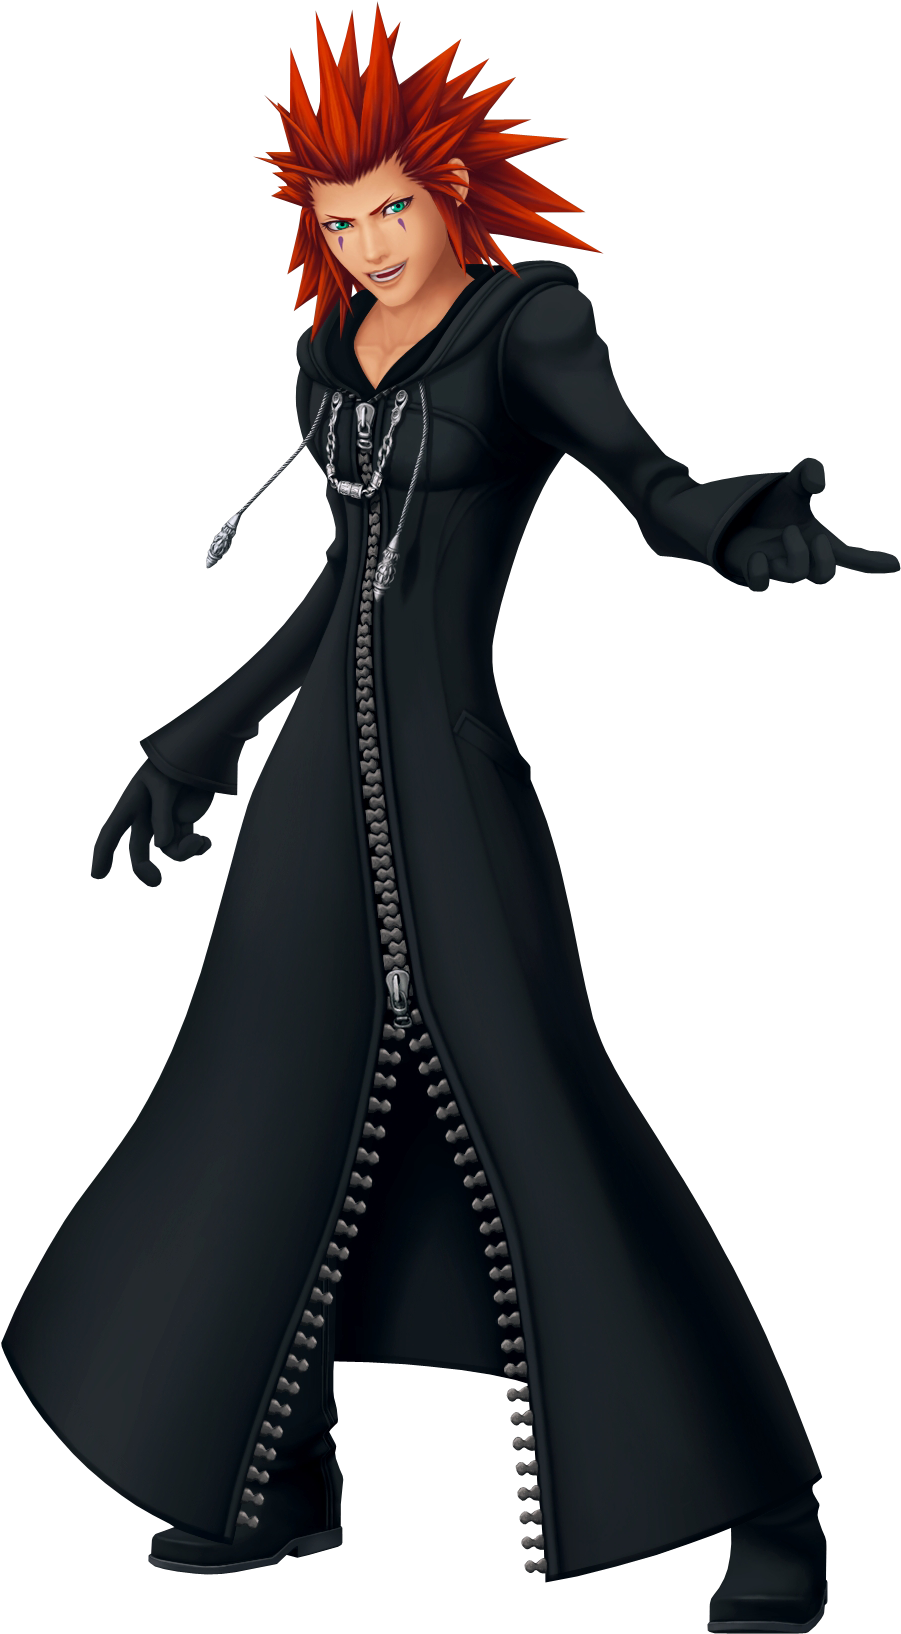 Axel 3 Khd - Kingdom Hearts Axel Png (984x1700), Png Download